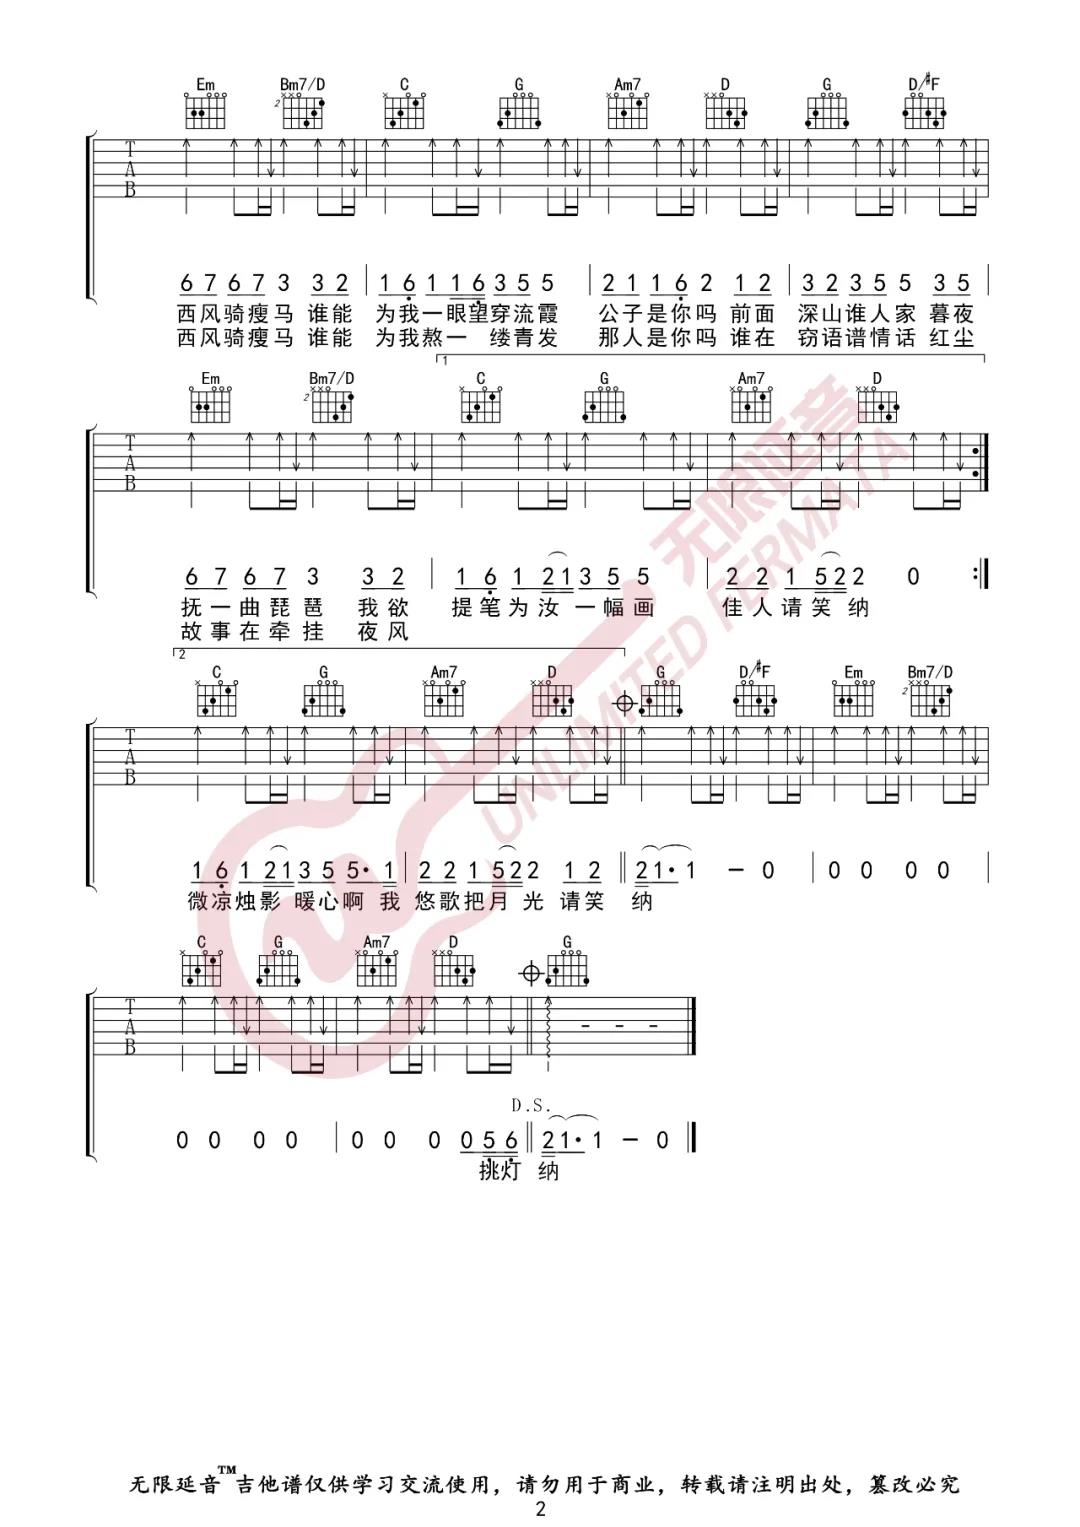 花僮《笑纳》吉他谱(G调)-Guitar Music Score